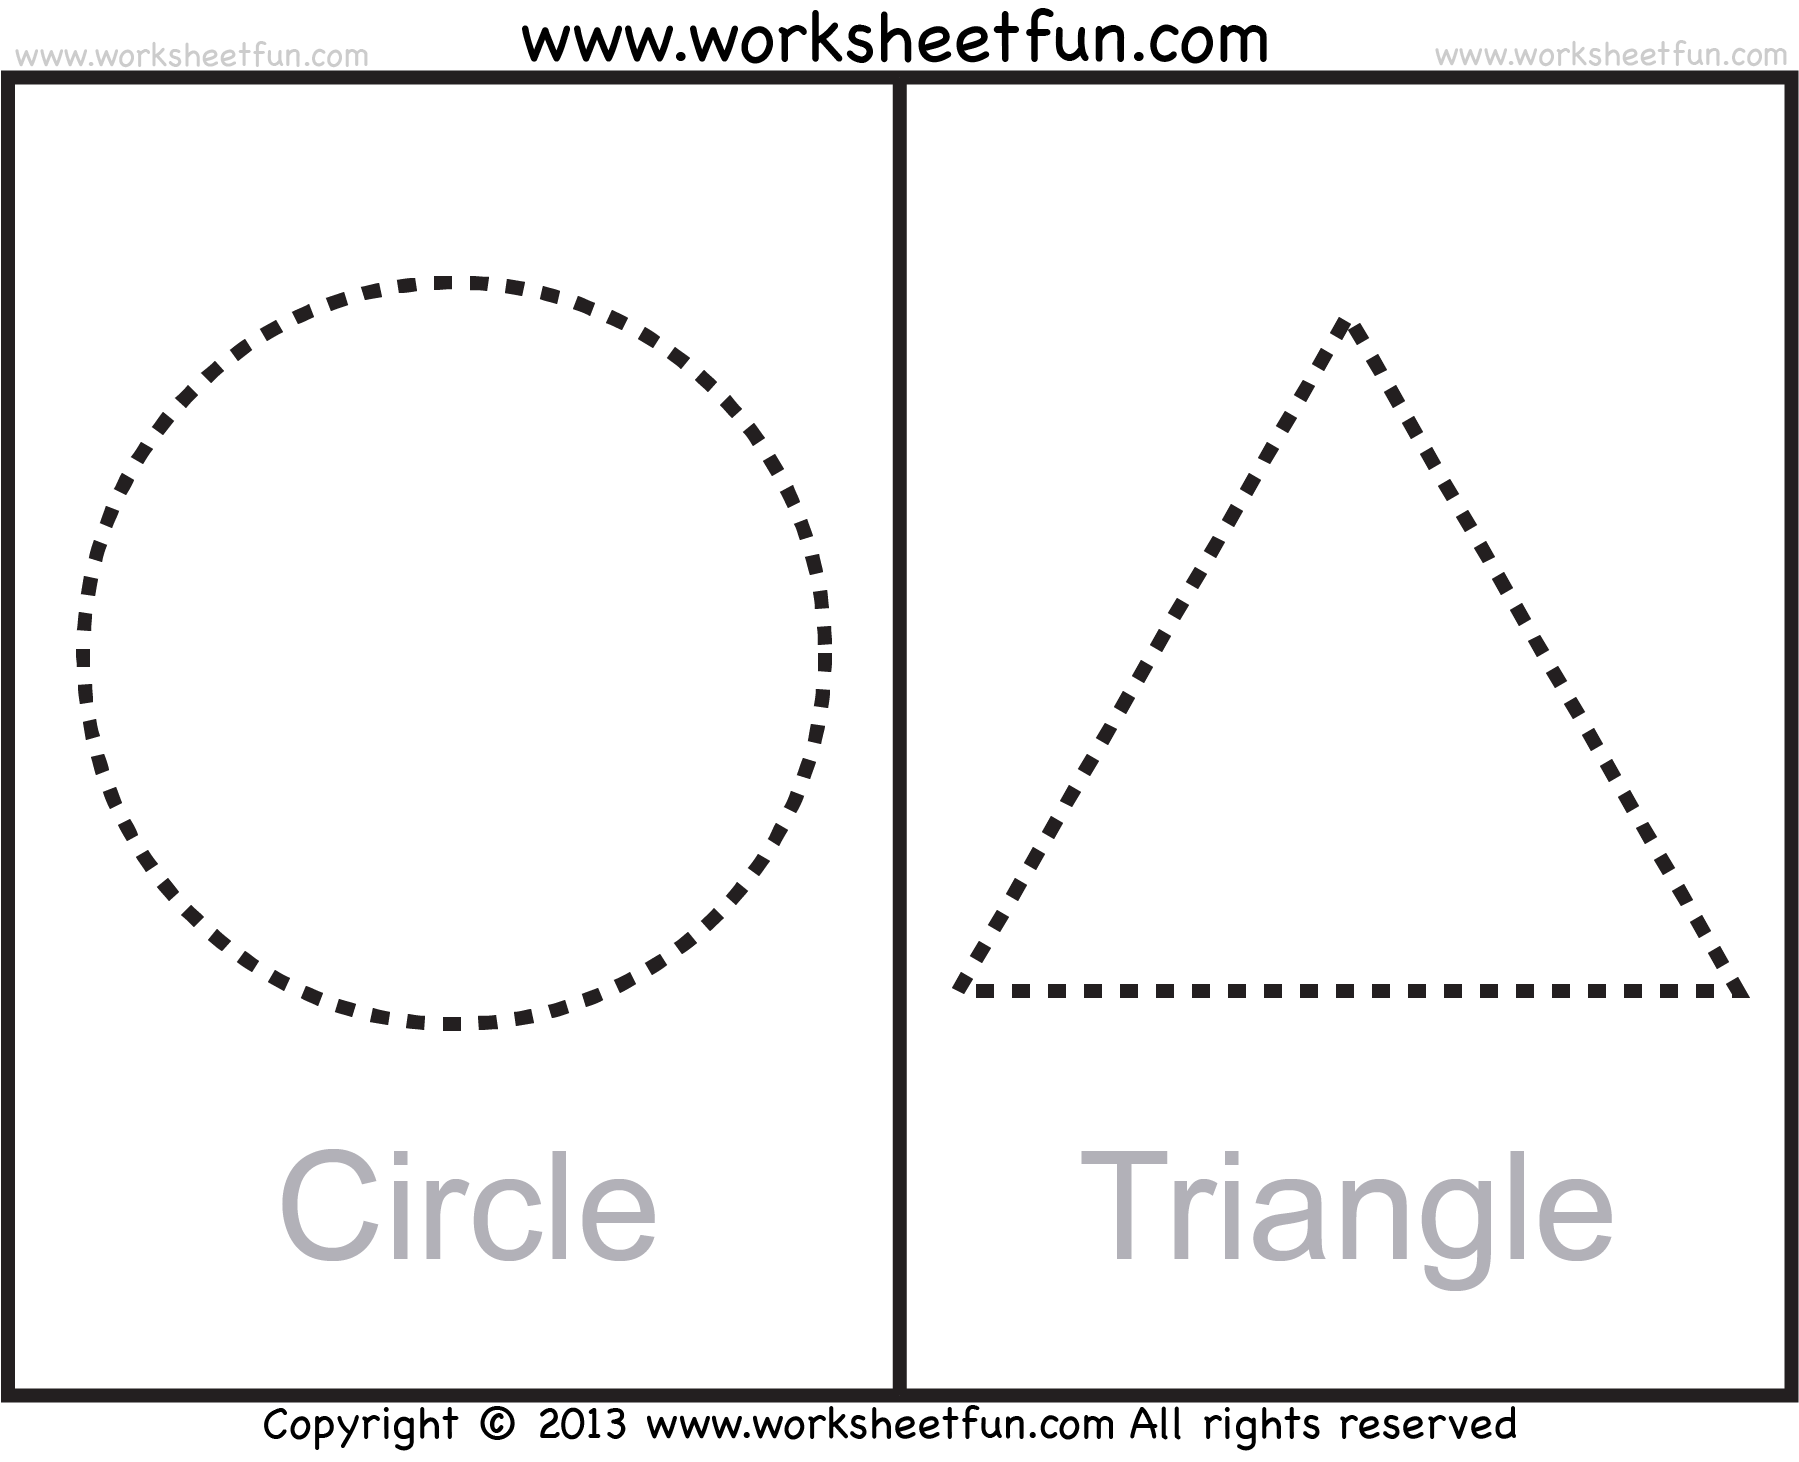 Circle triangle. Shapes сшксдуб екшфтпдуб ыйгфку прописи для детей. Круг треугольник квадрат пунктиром. Обводка круг квадрат треугольник. Геометрические фигуры обвести квадрат круг треугольник.